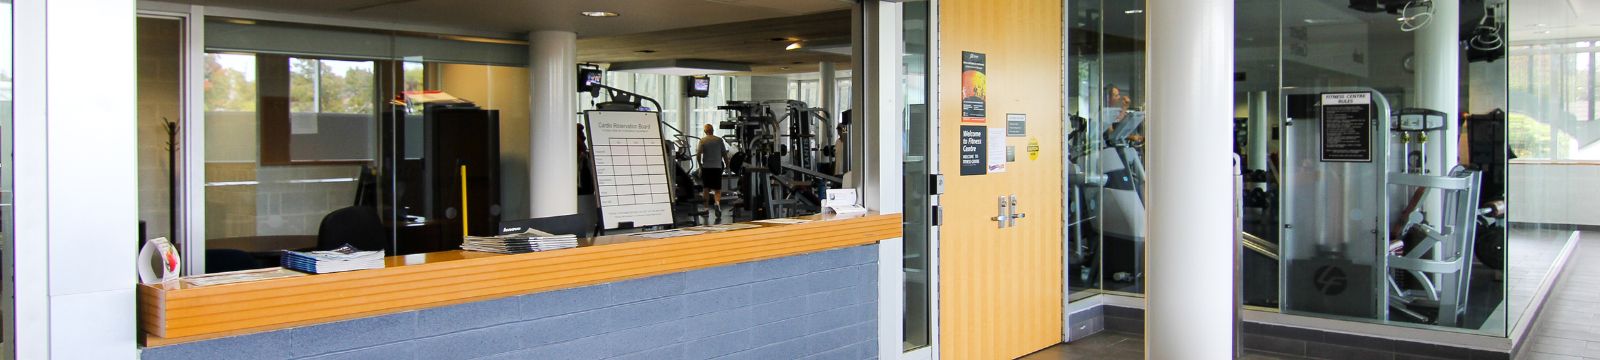 South Oshawa Community Centre Fitness Centre Desk